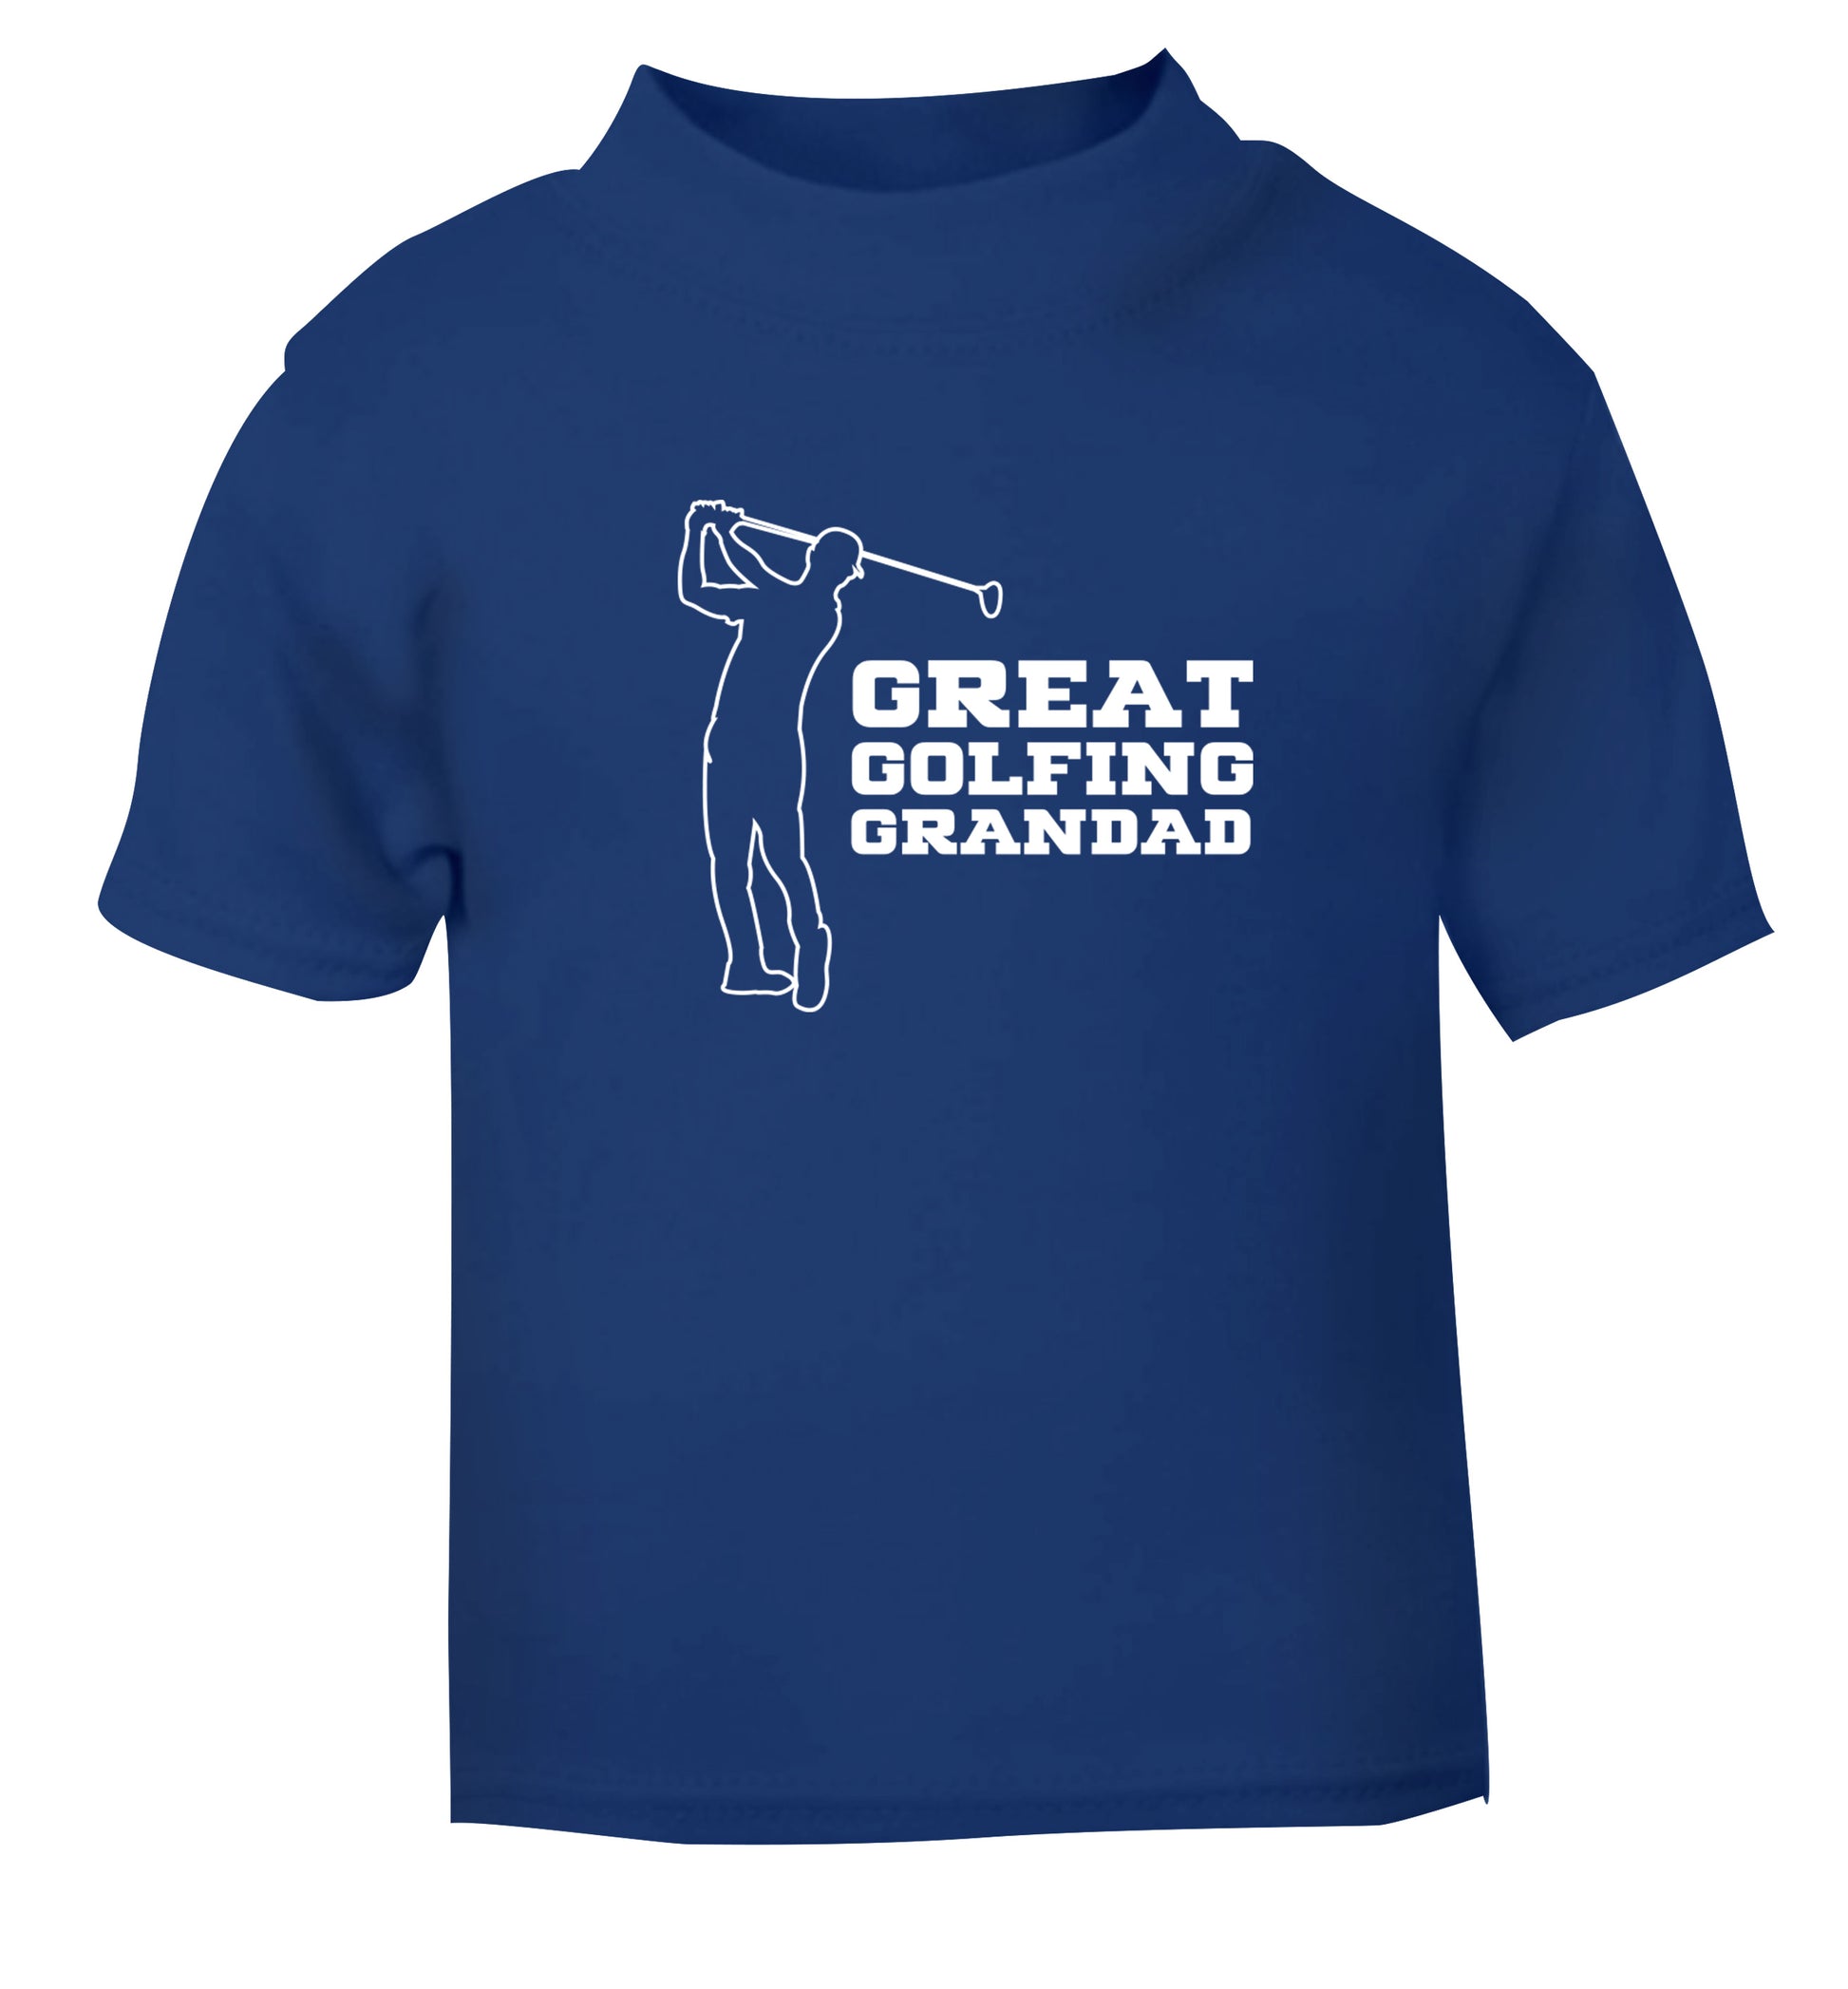 Great Golfing Grandad blue Baby Toddler Tshirt 2 Years